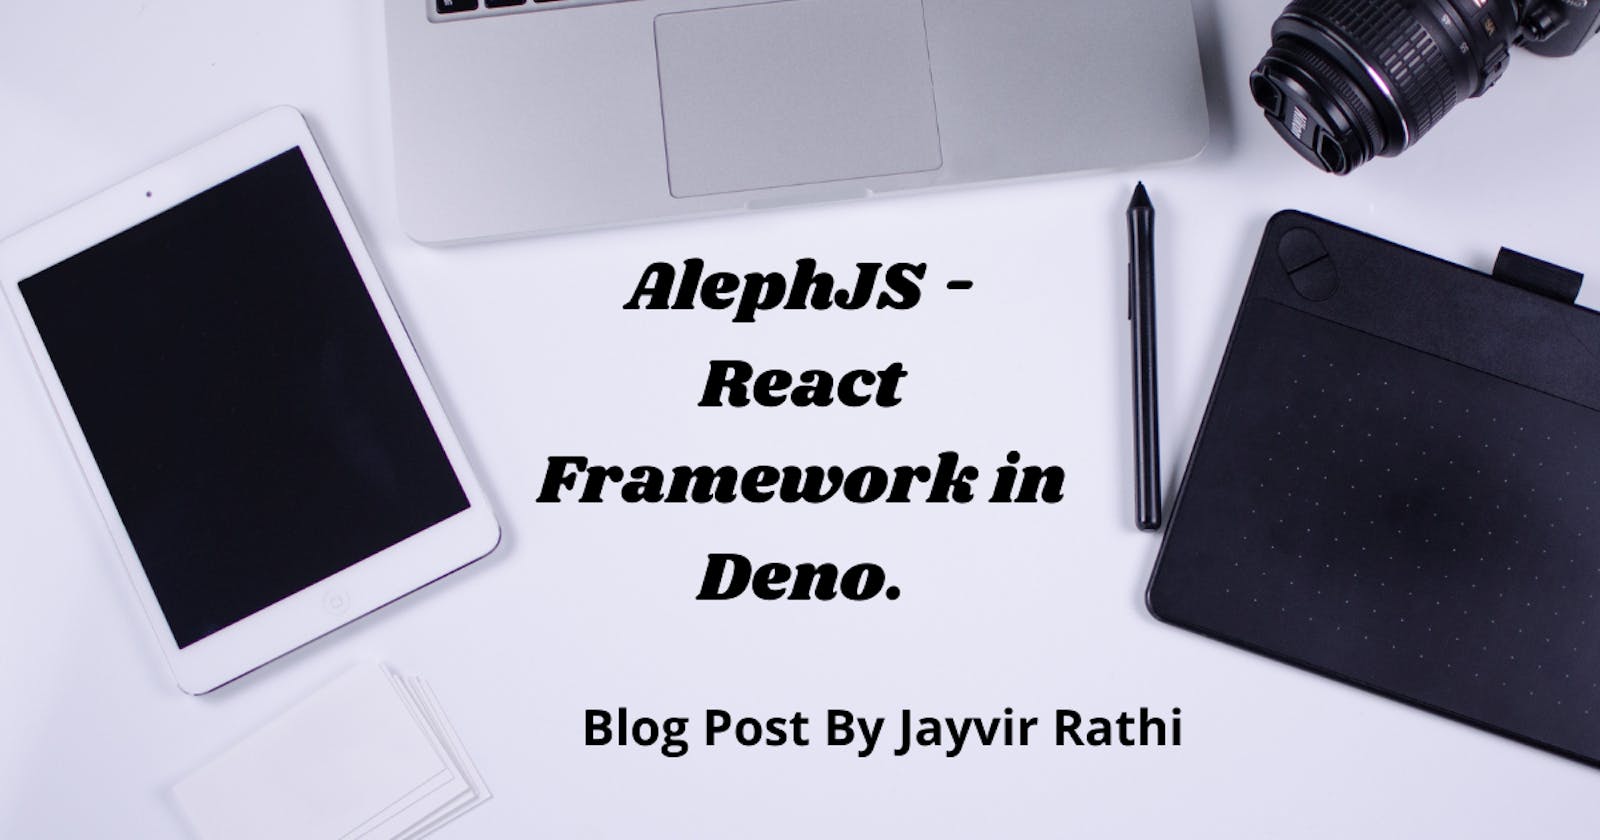 AlephJS - The React Framework in Deno